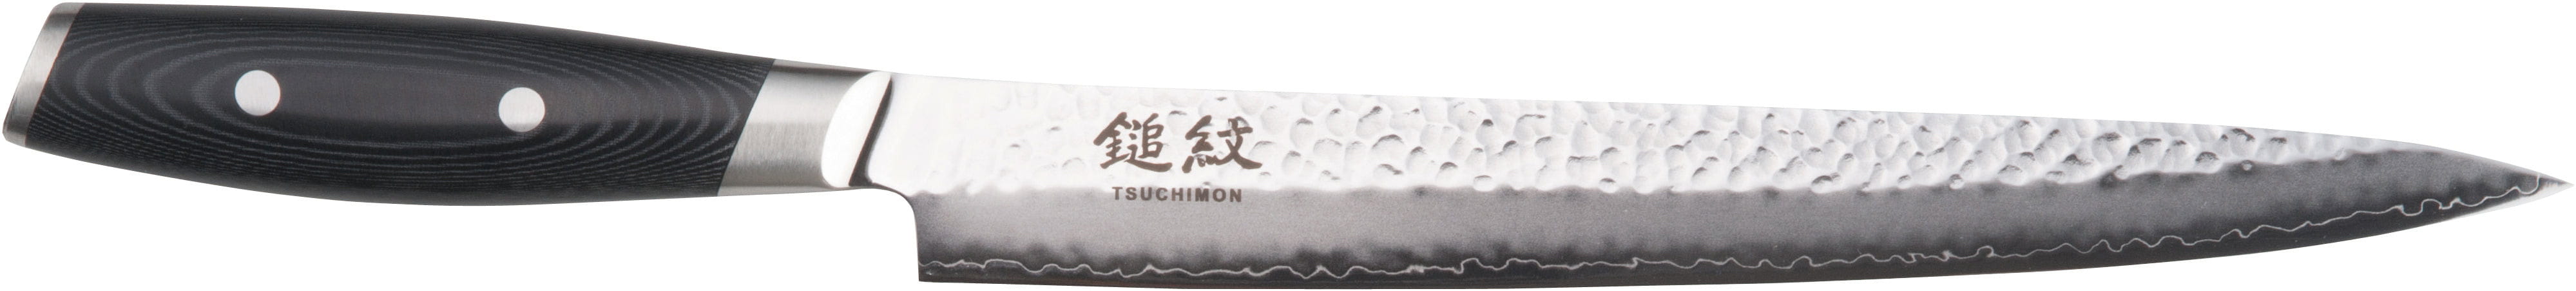 Yaxell Tsuchimon Carving Knife, 25.5 Cm